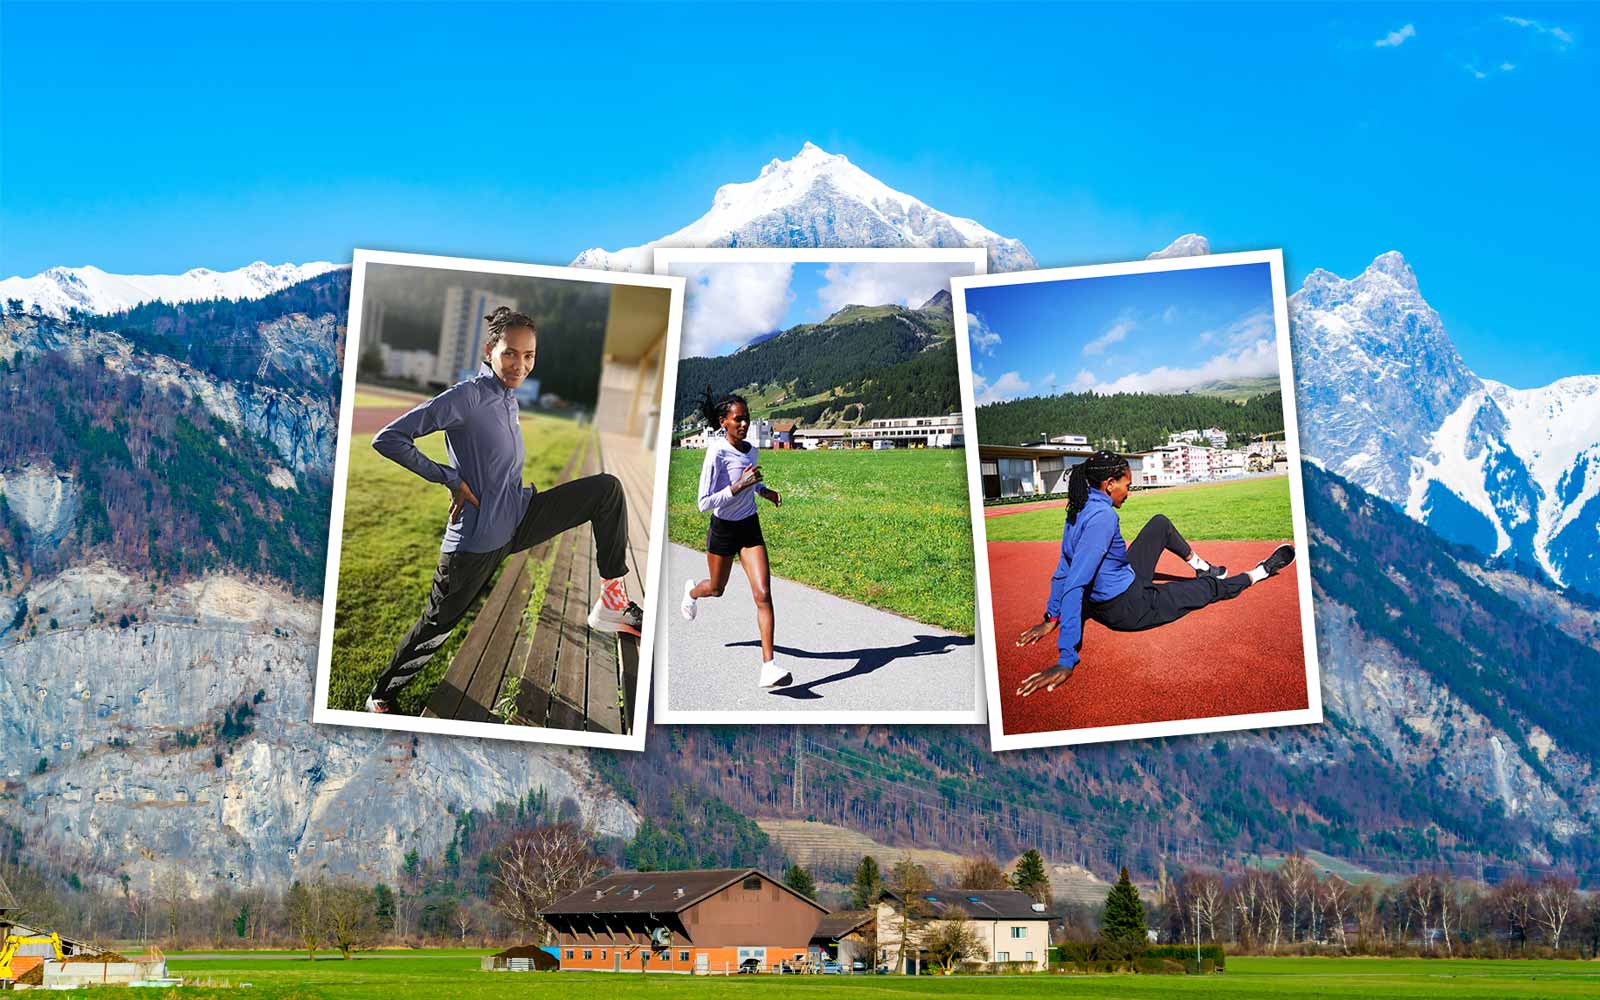 Melat Kejeta: Vom Höhentraining in Sankt Moritz zum Frankfurt Half Marathon Invitational